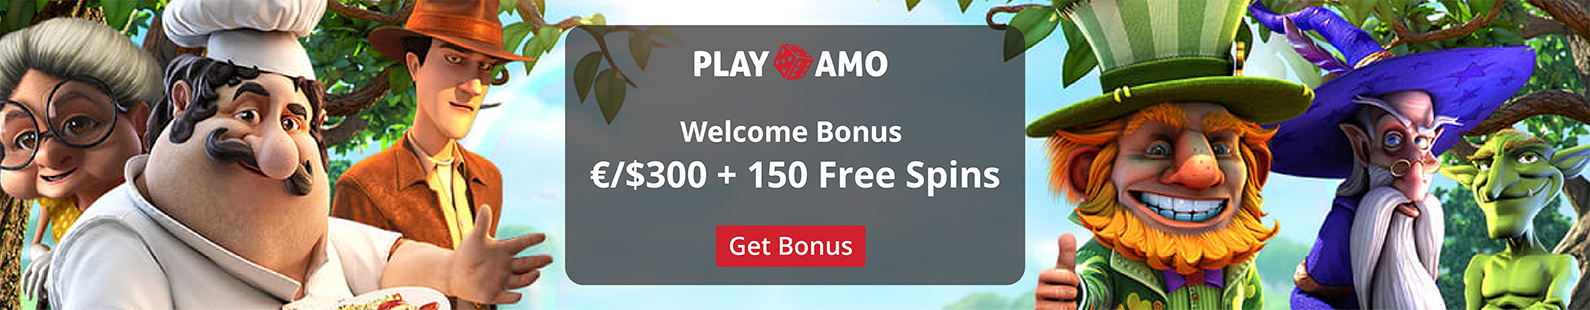 Playamo Casino: 100% Welcome Bonus up to €/$300 plus 150 Free Spins